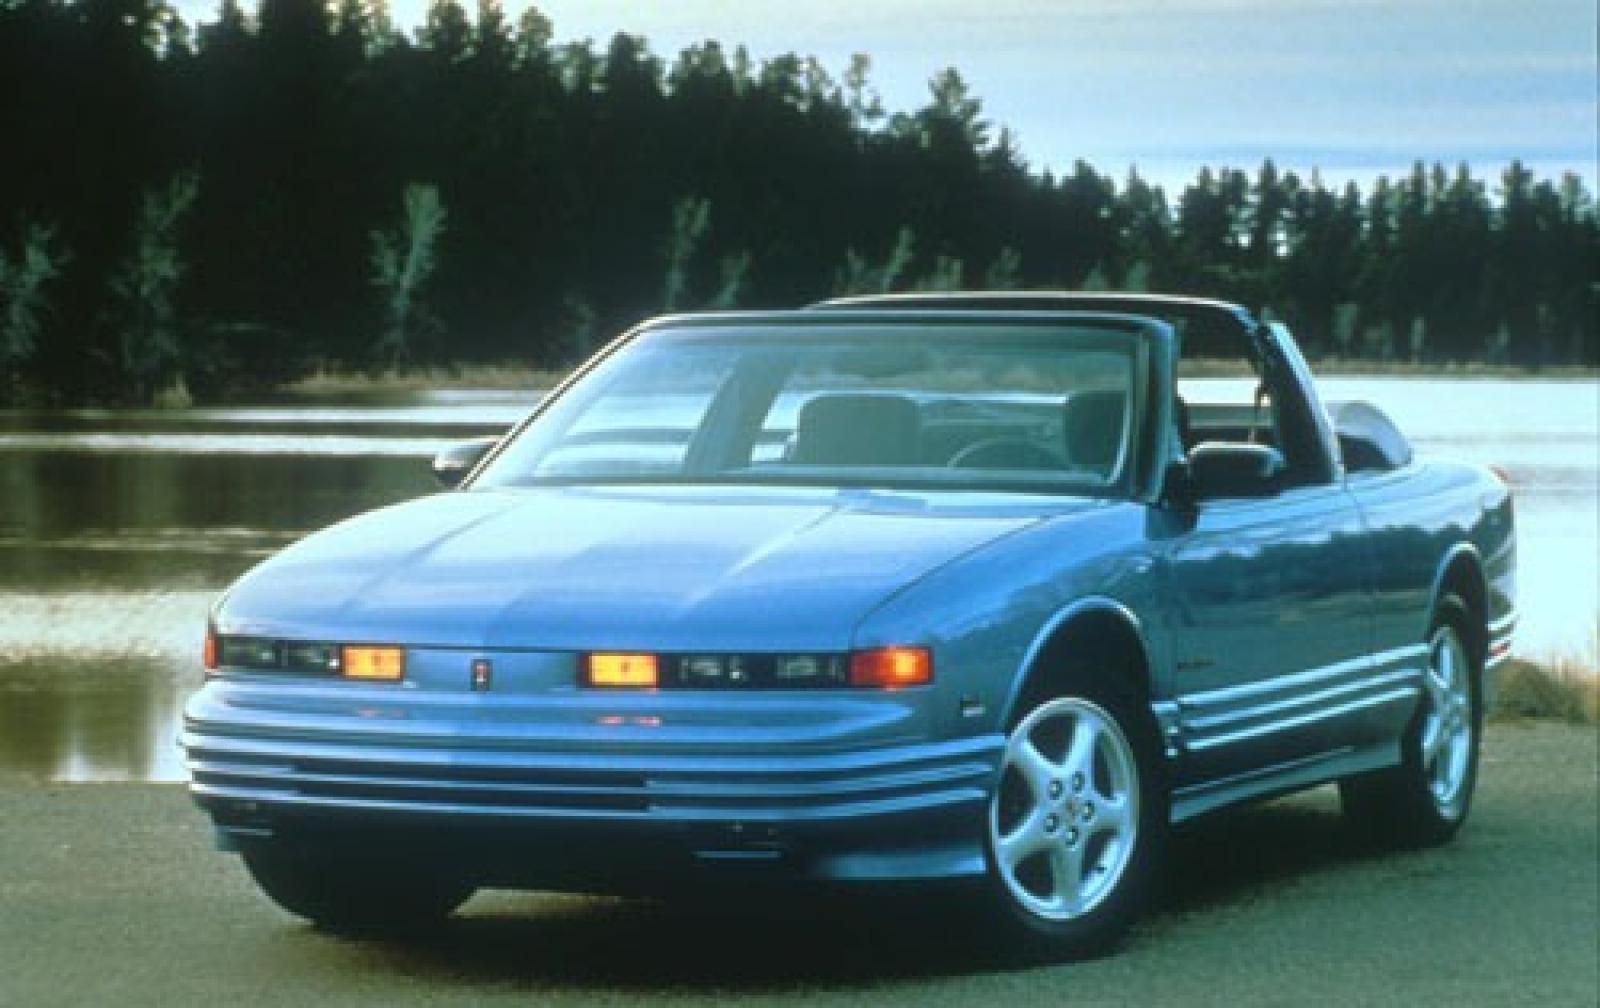 1994 Oldsmobile Cutlass S exterior #7 - size 1600.